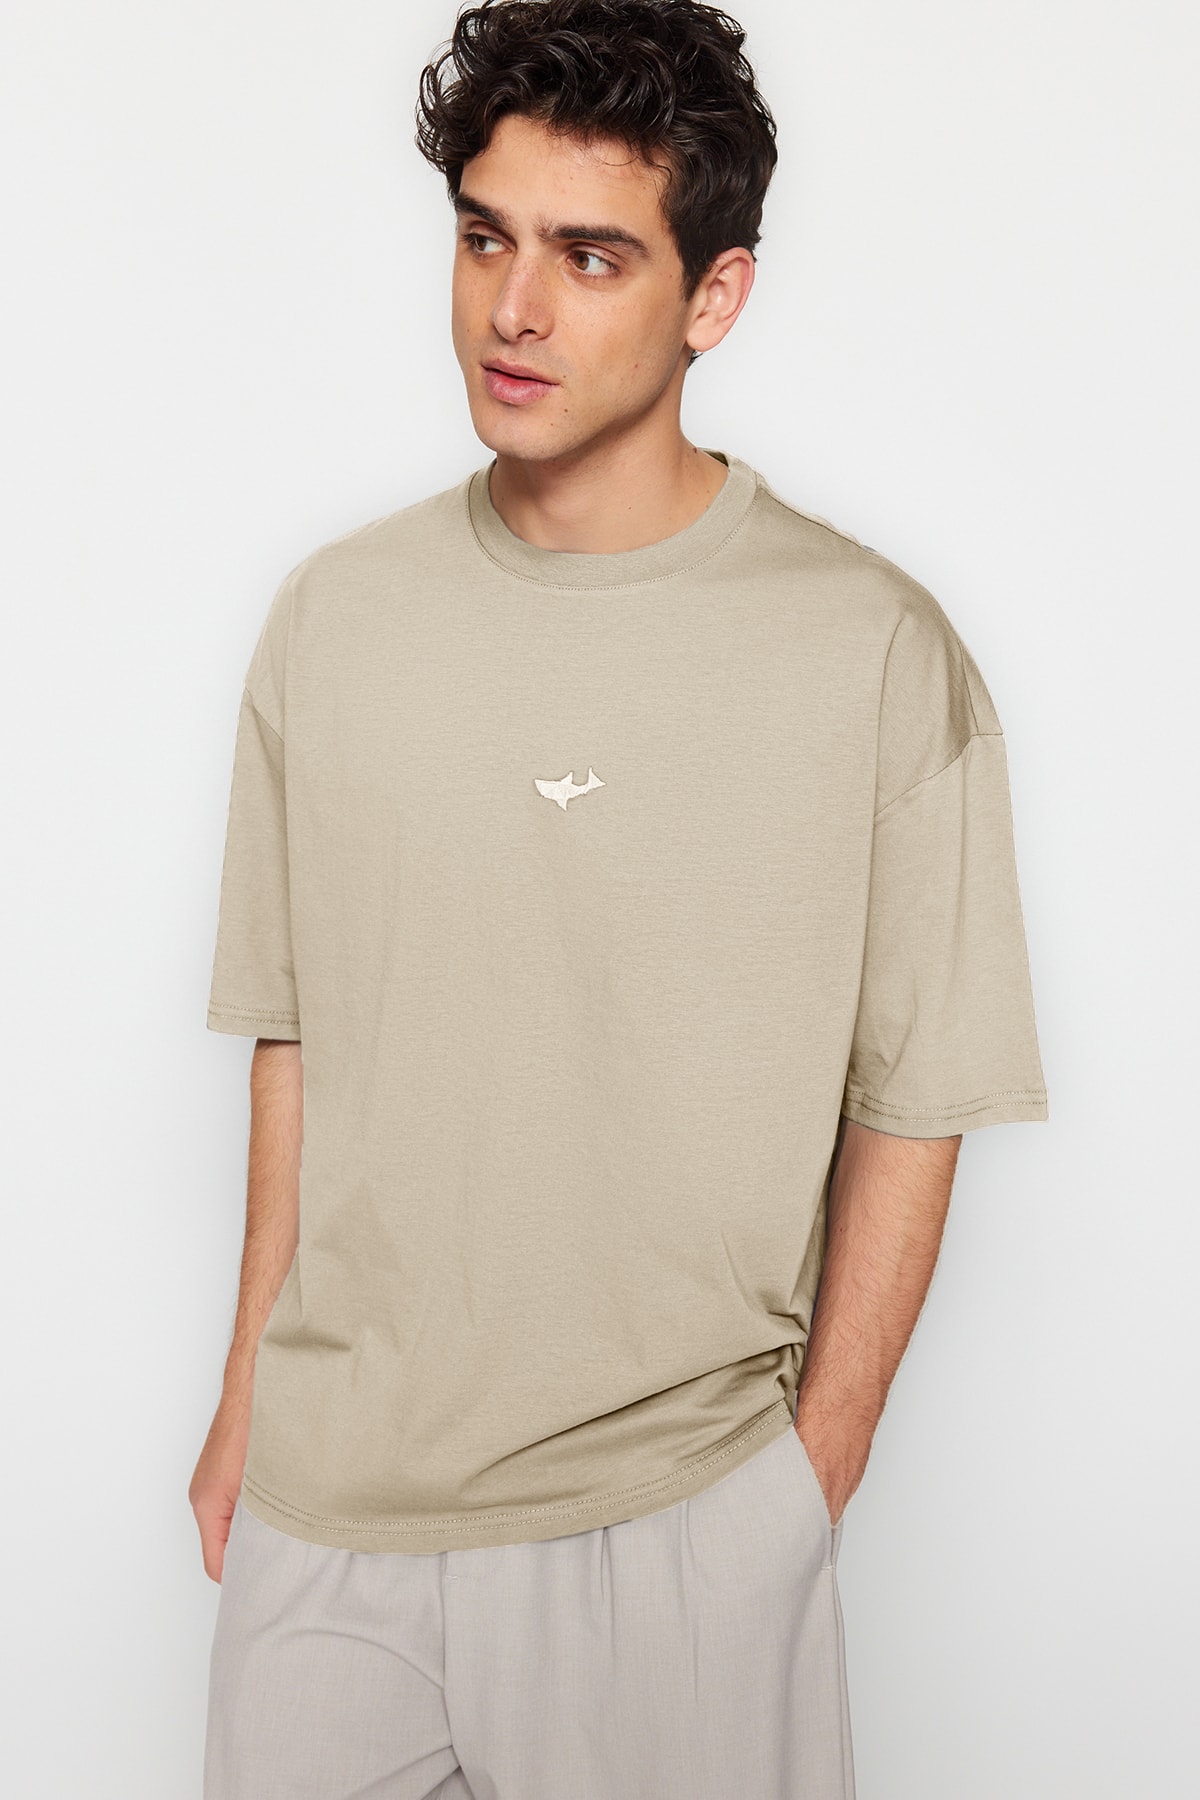 Trendyol Stone Men's Oversize/Wide Cut Crew Neck Short Sleeve Embroidered Shark T-Shirt